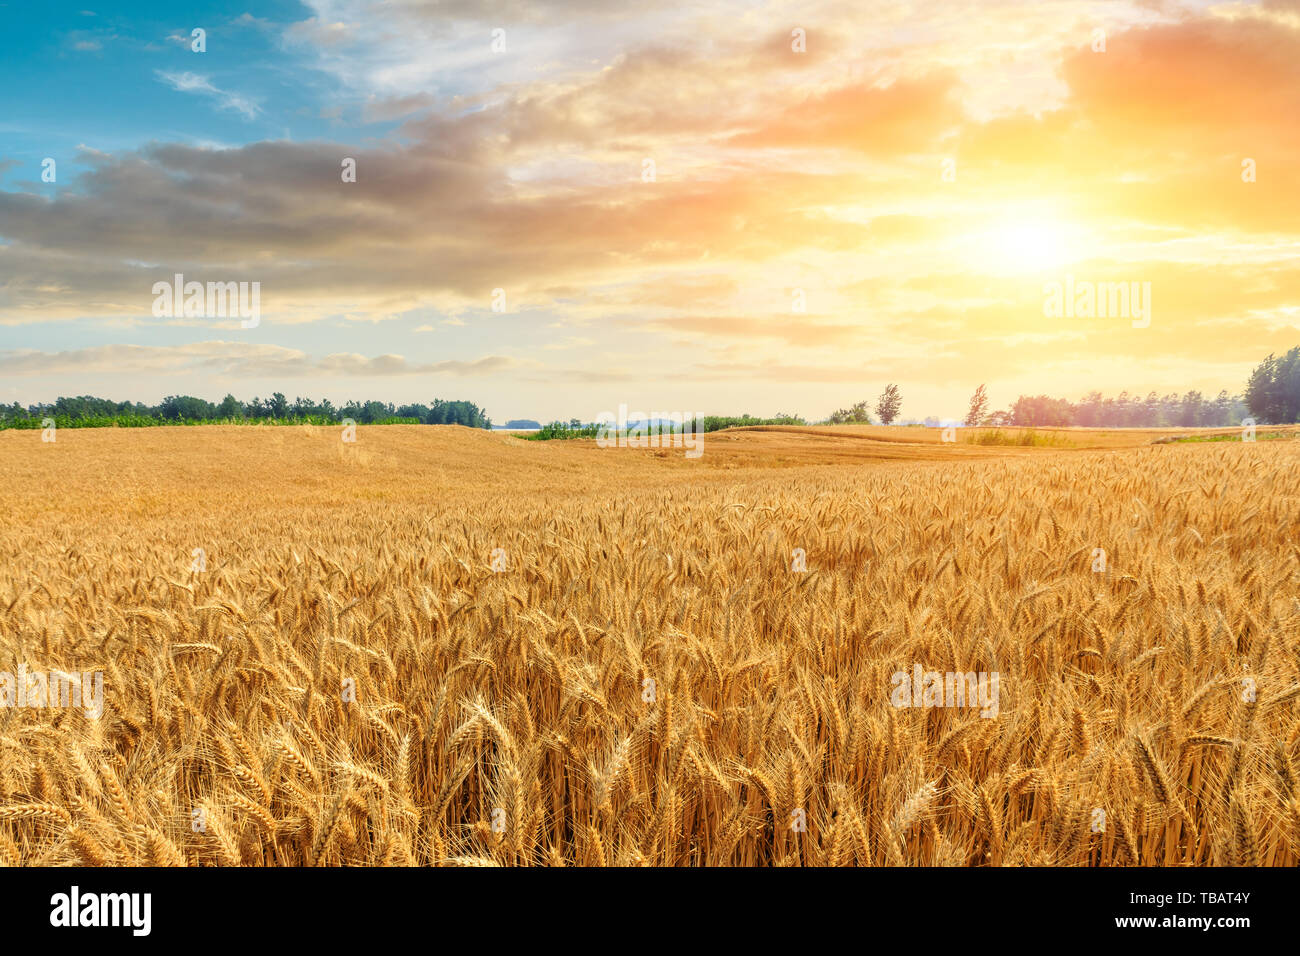 Wheat crop field sunset landscape Stock Photo